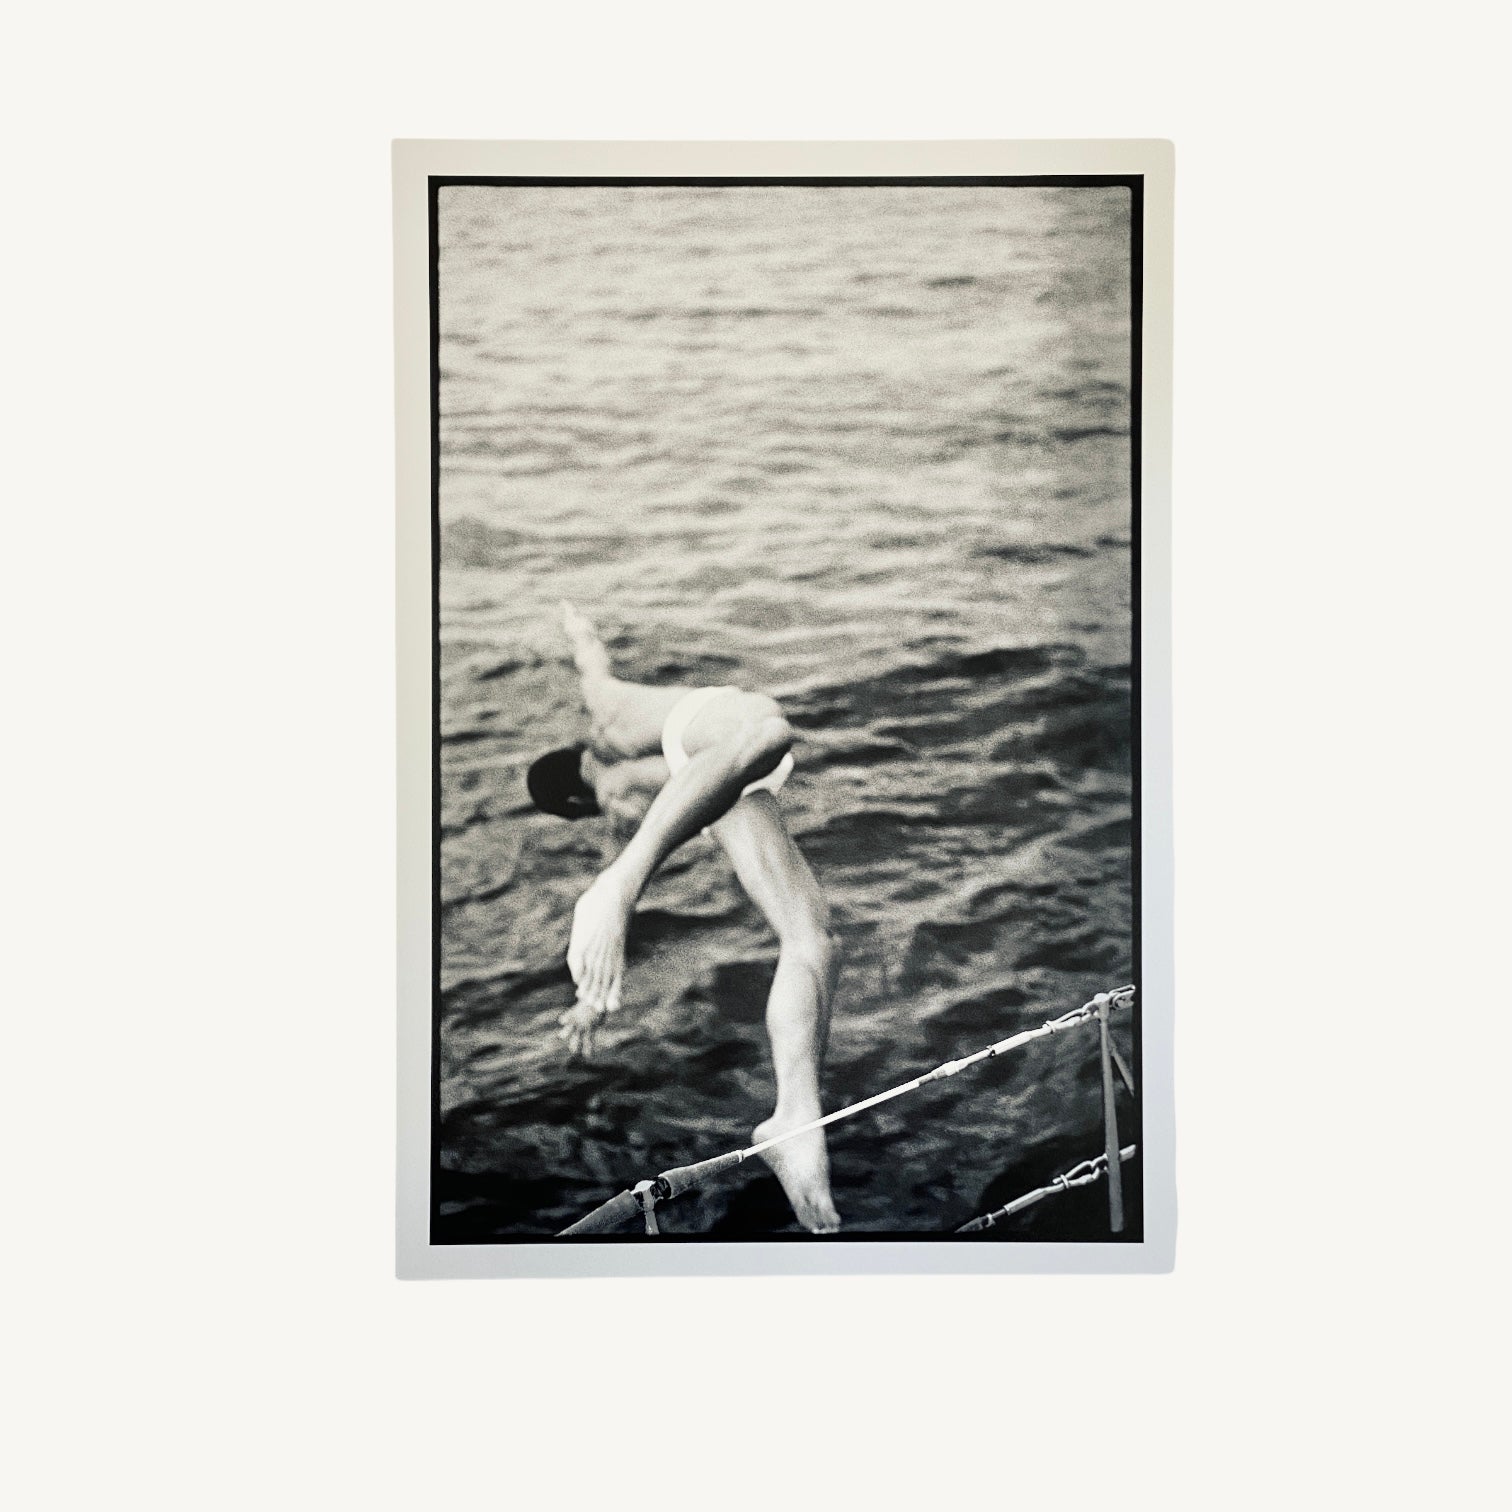 Jean-Luc Fievet 'The Diver' Ltd Edition 1/10 - colletteconsignment.com